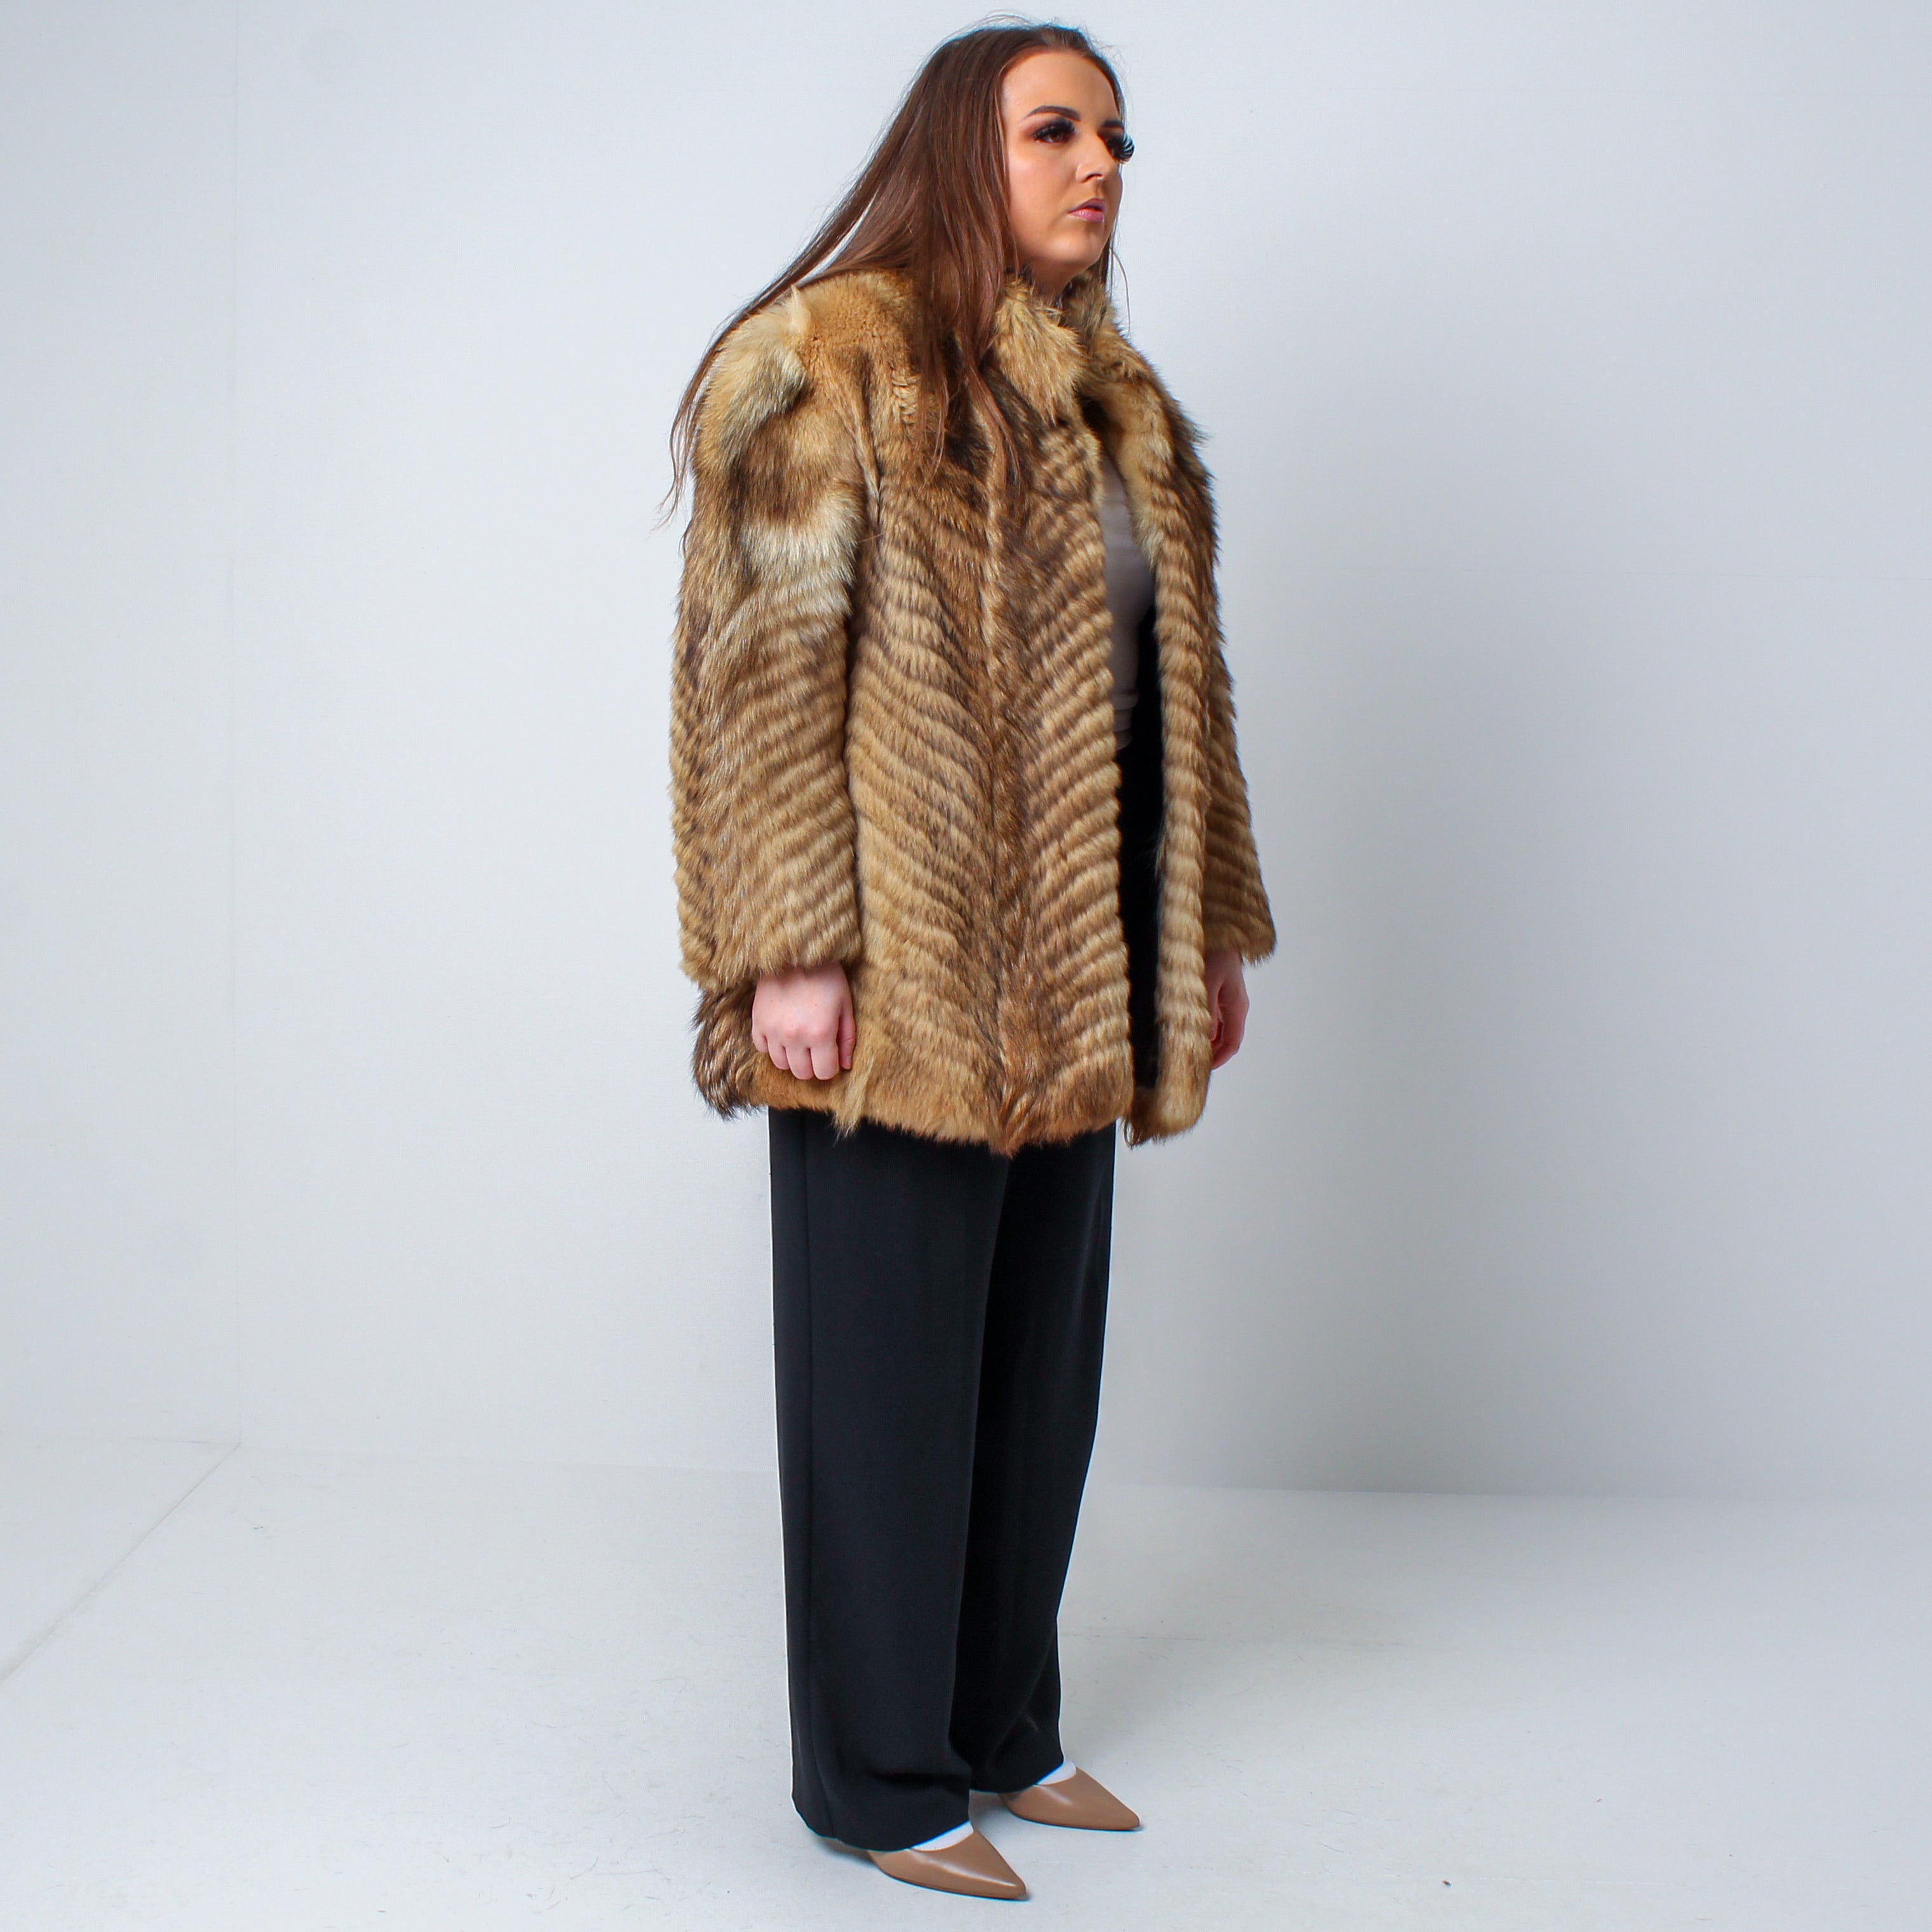 Women’s Luxury Vintage Real Natural Fox Fur Coat - Large / XL UK 12-16